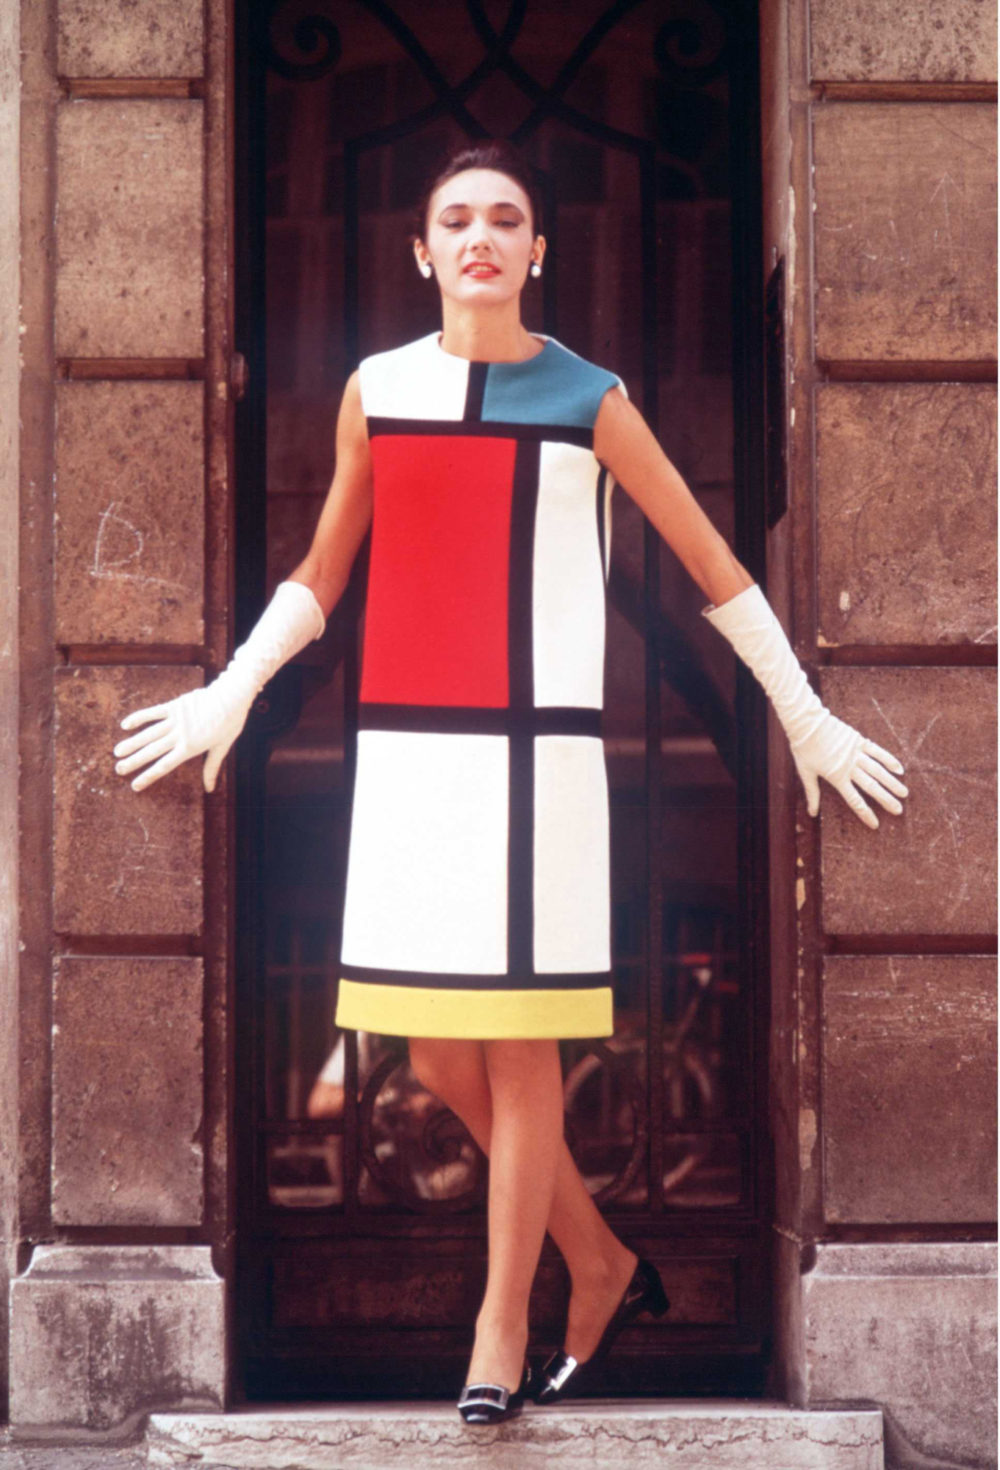 The YSL Mondrian Dress